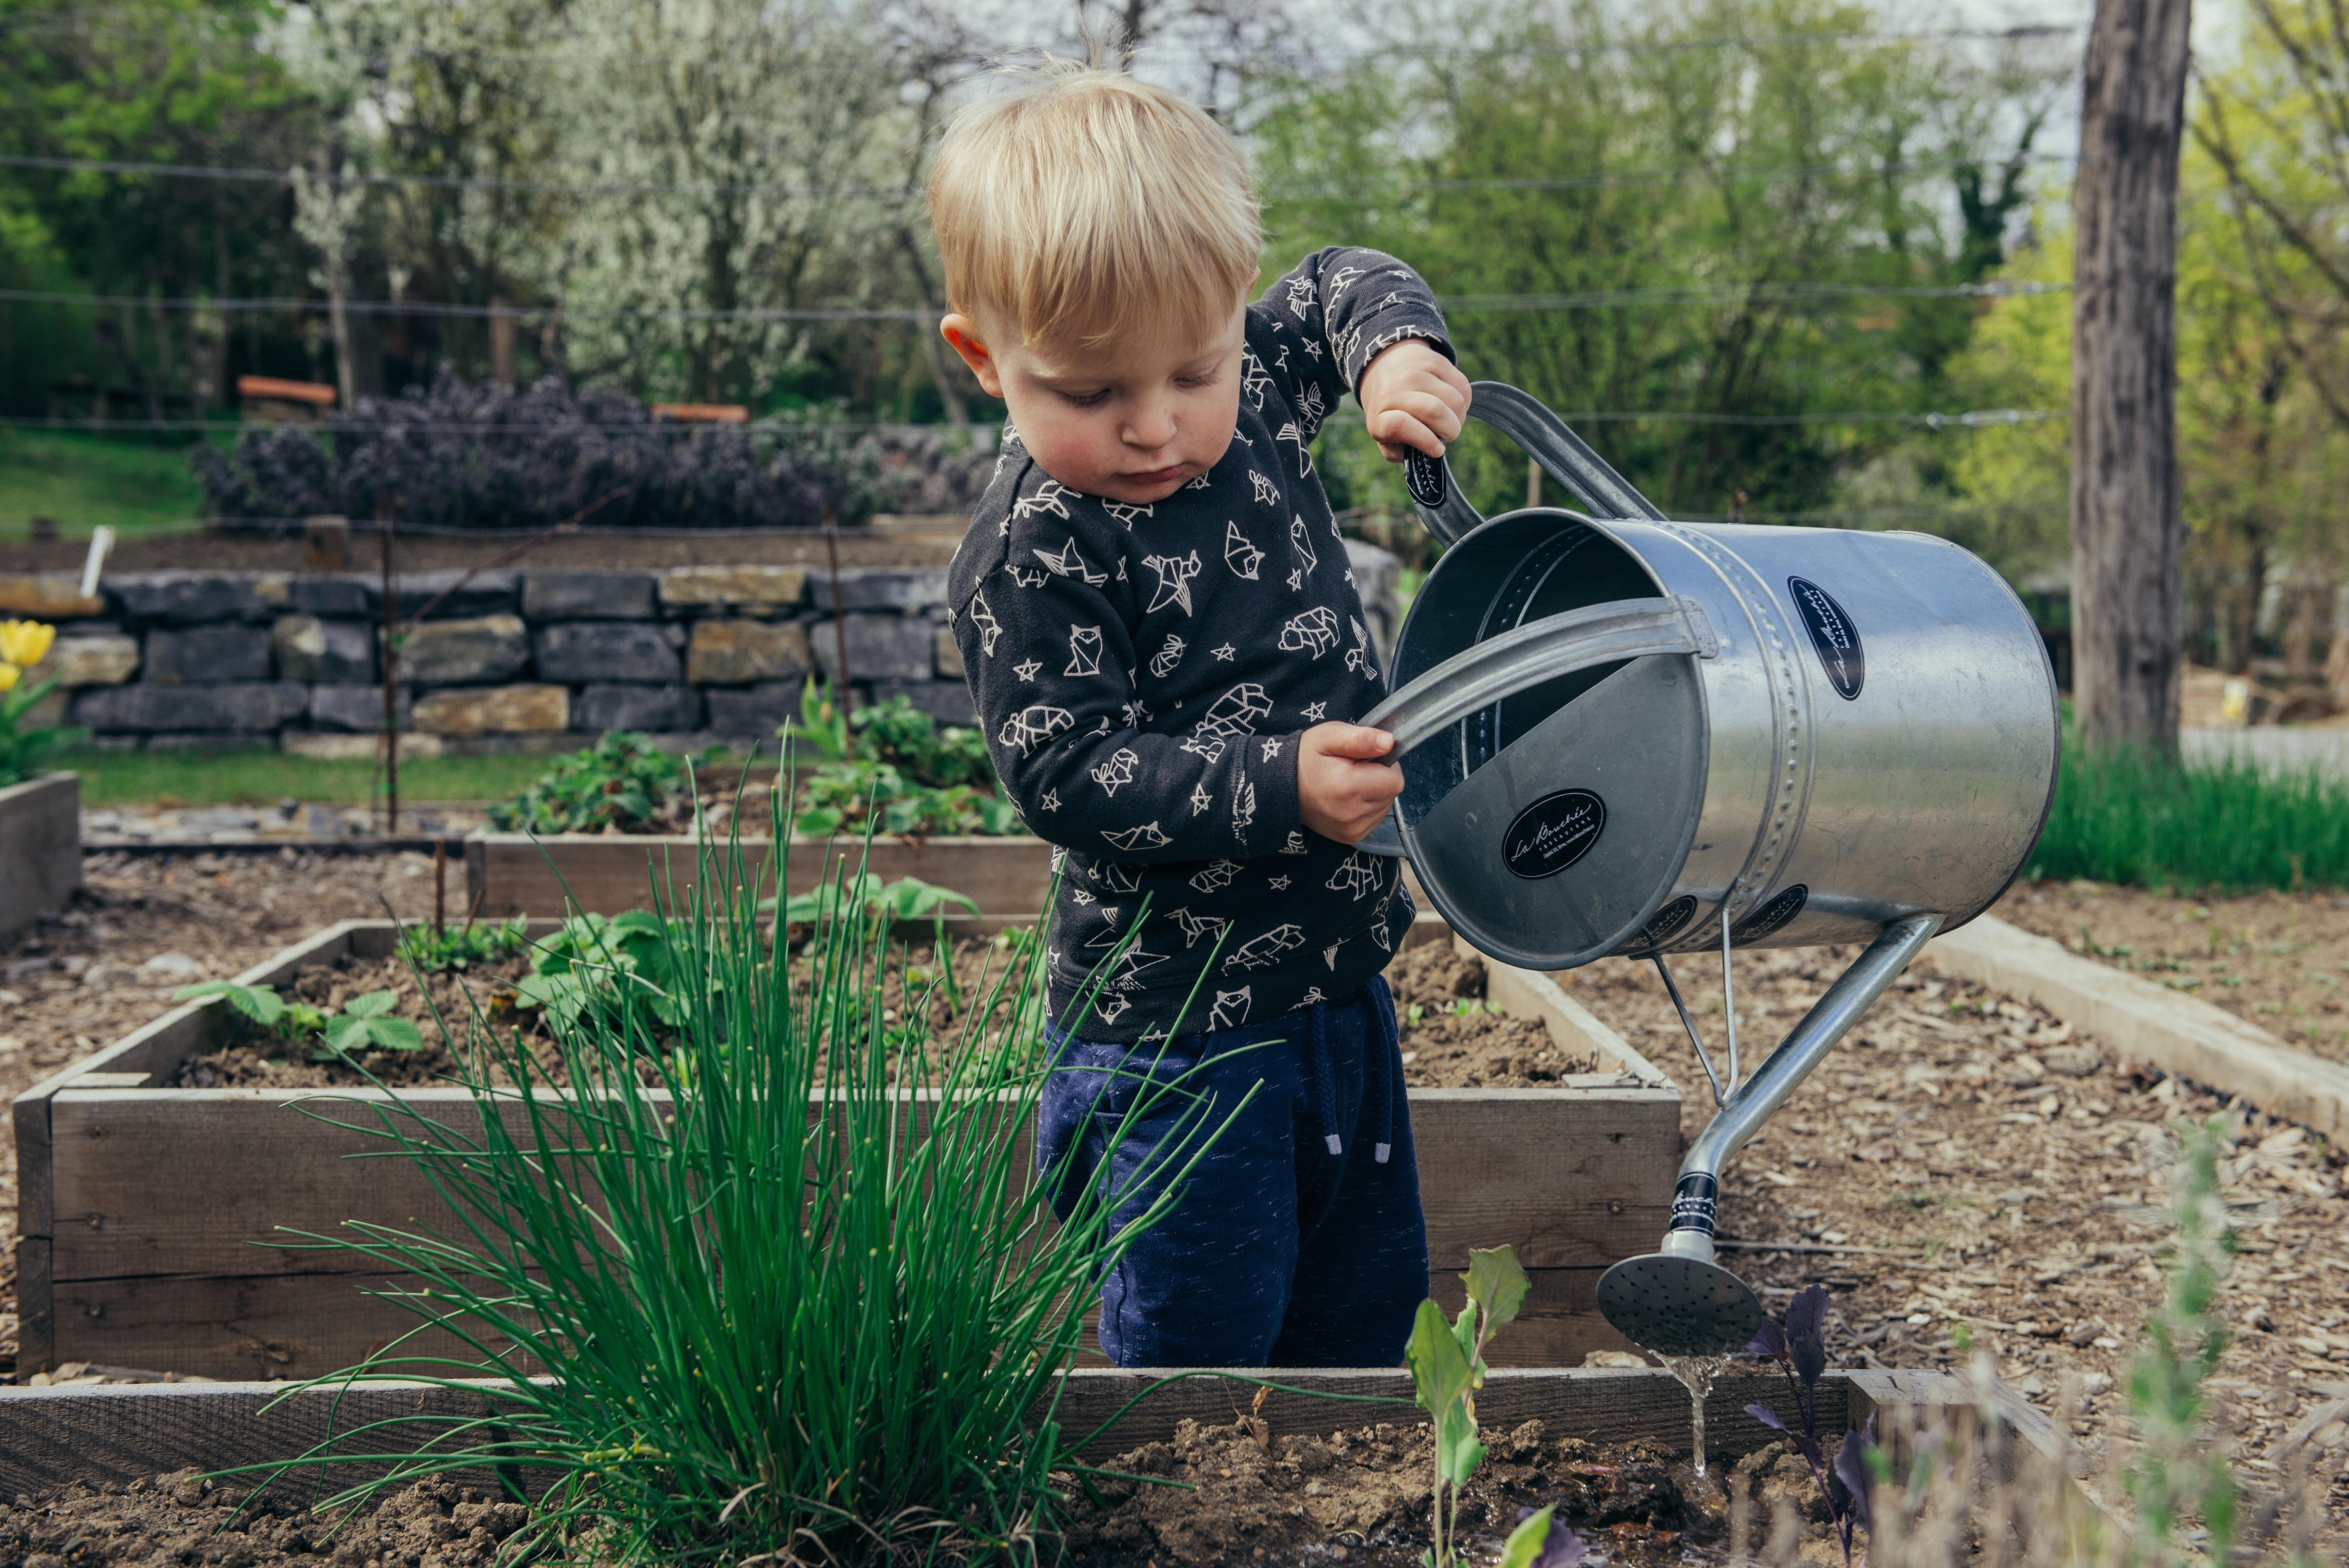 Young boy watering garden